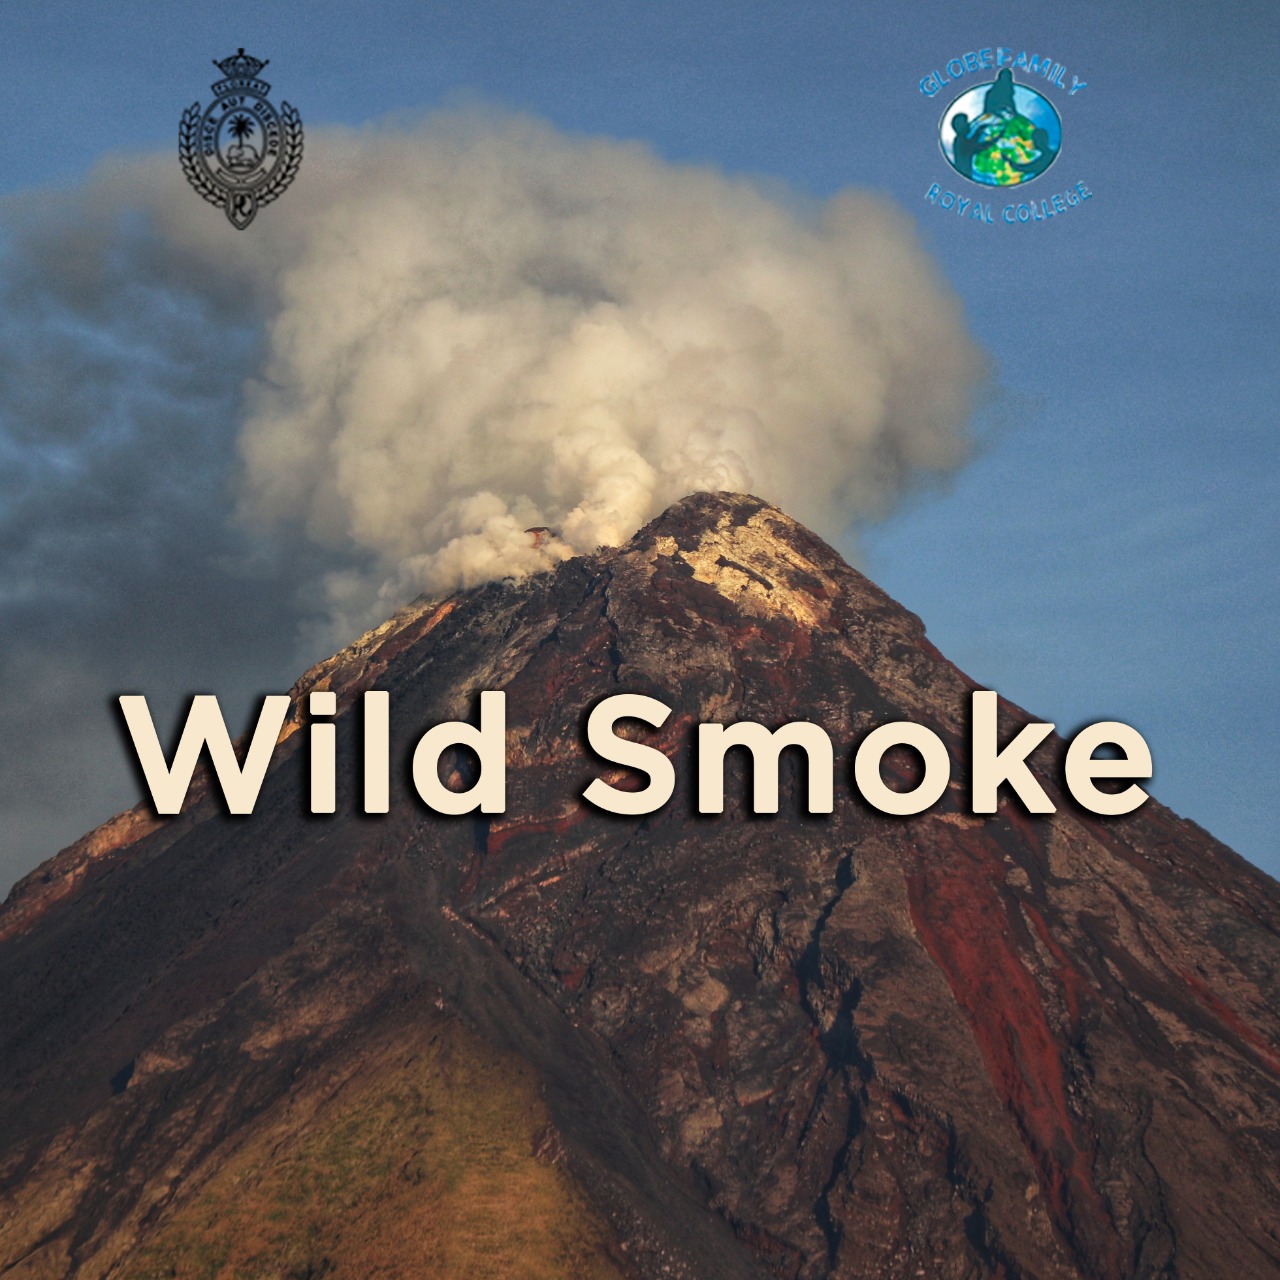 Wild Smoke - The Royal College